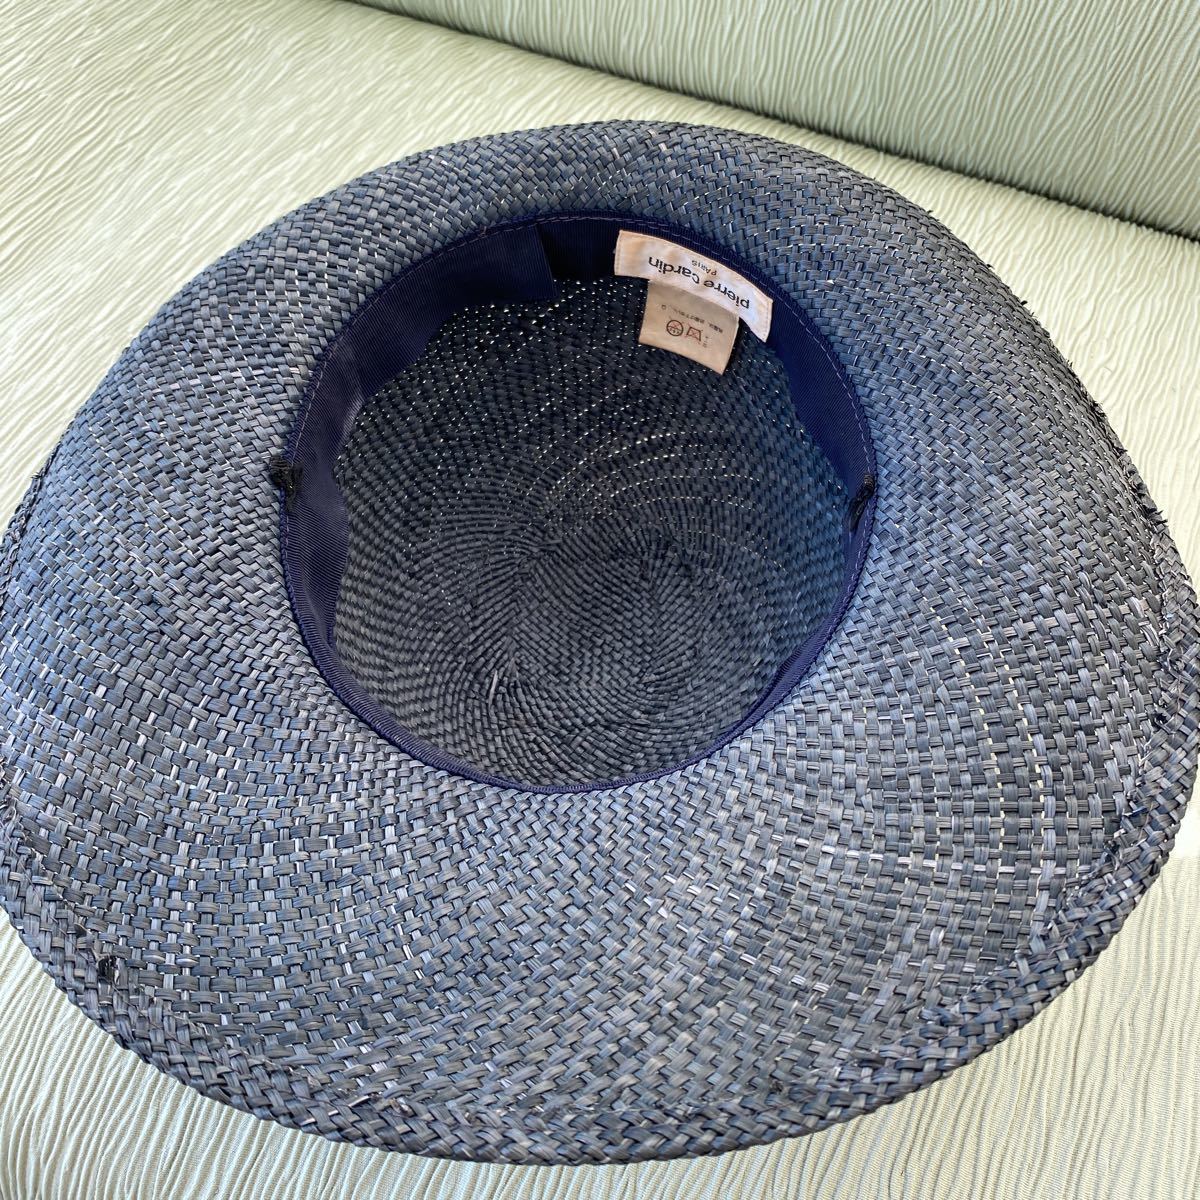  Pierre Cardin navy blue straw hat 